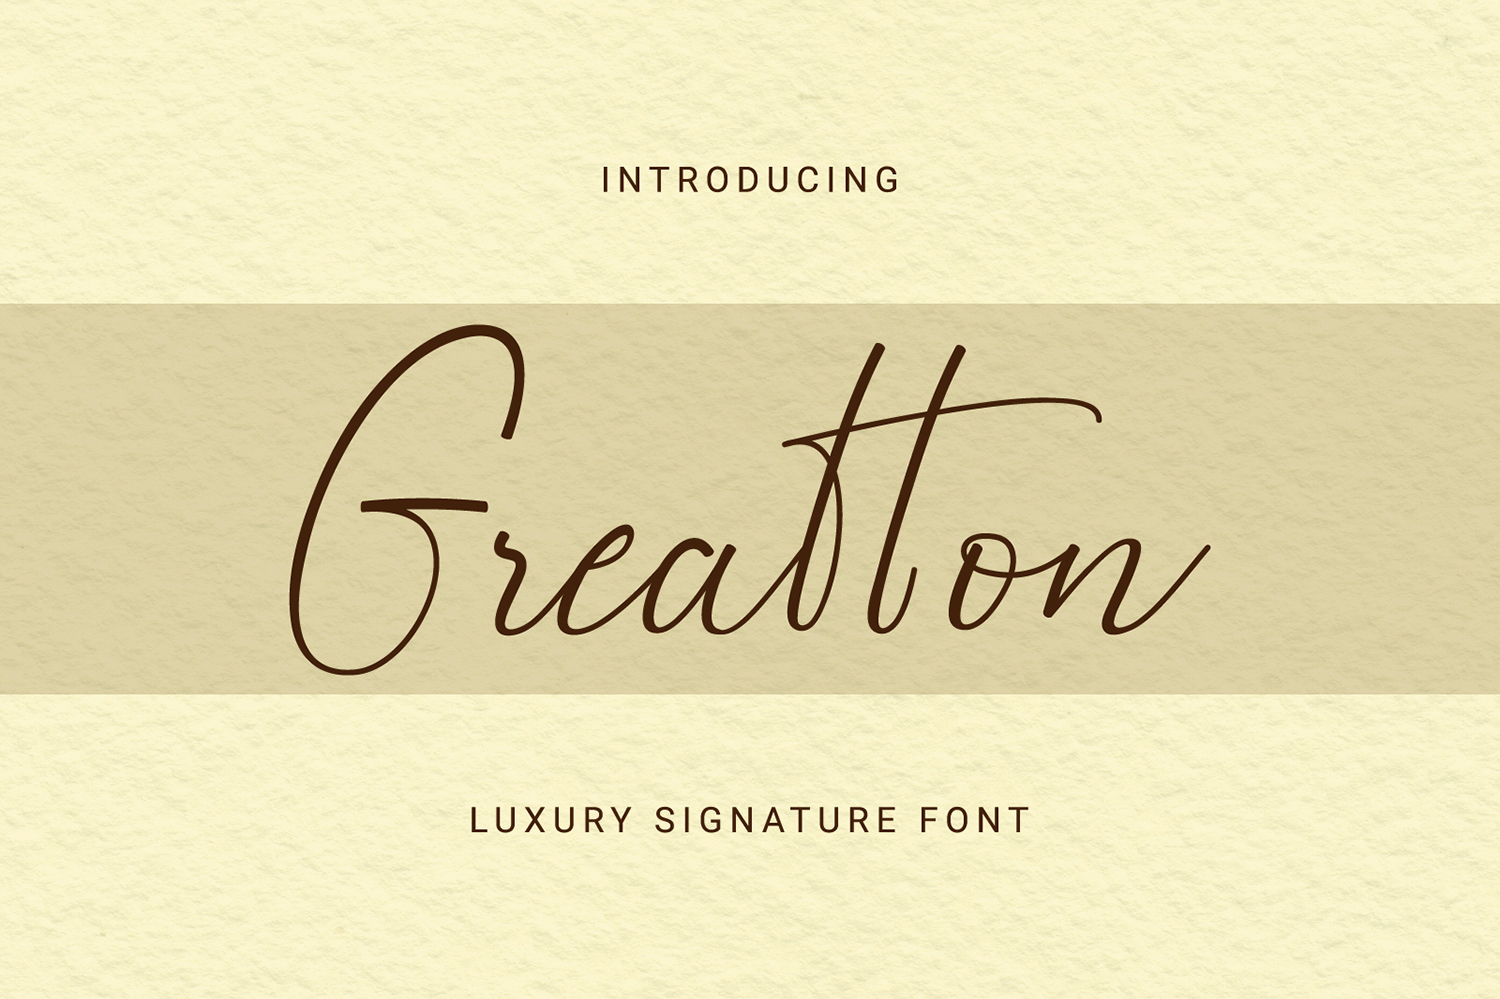 Greatton Free Font